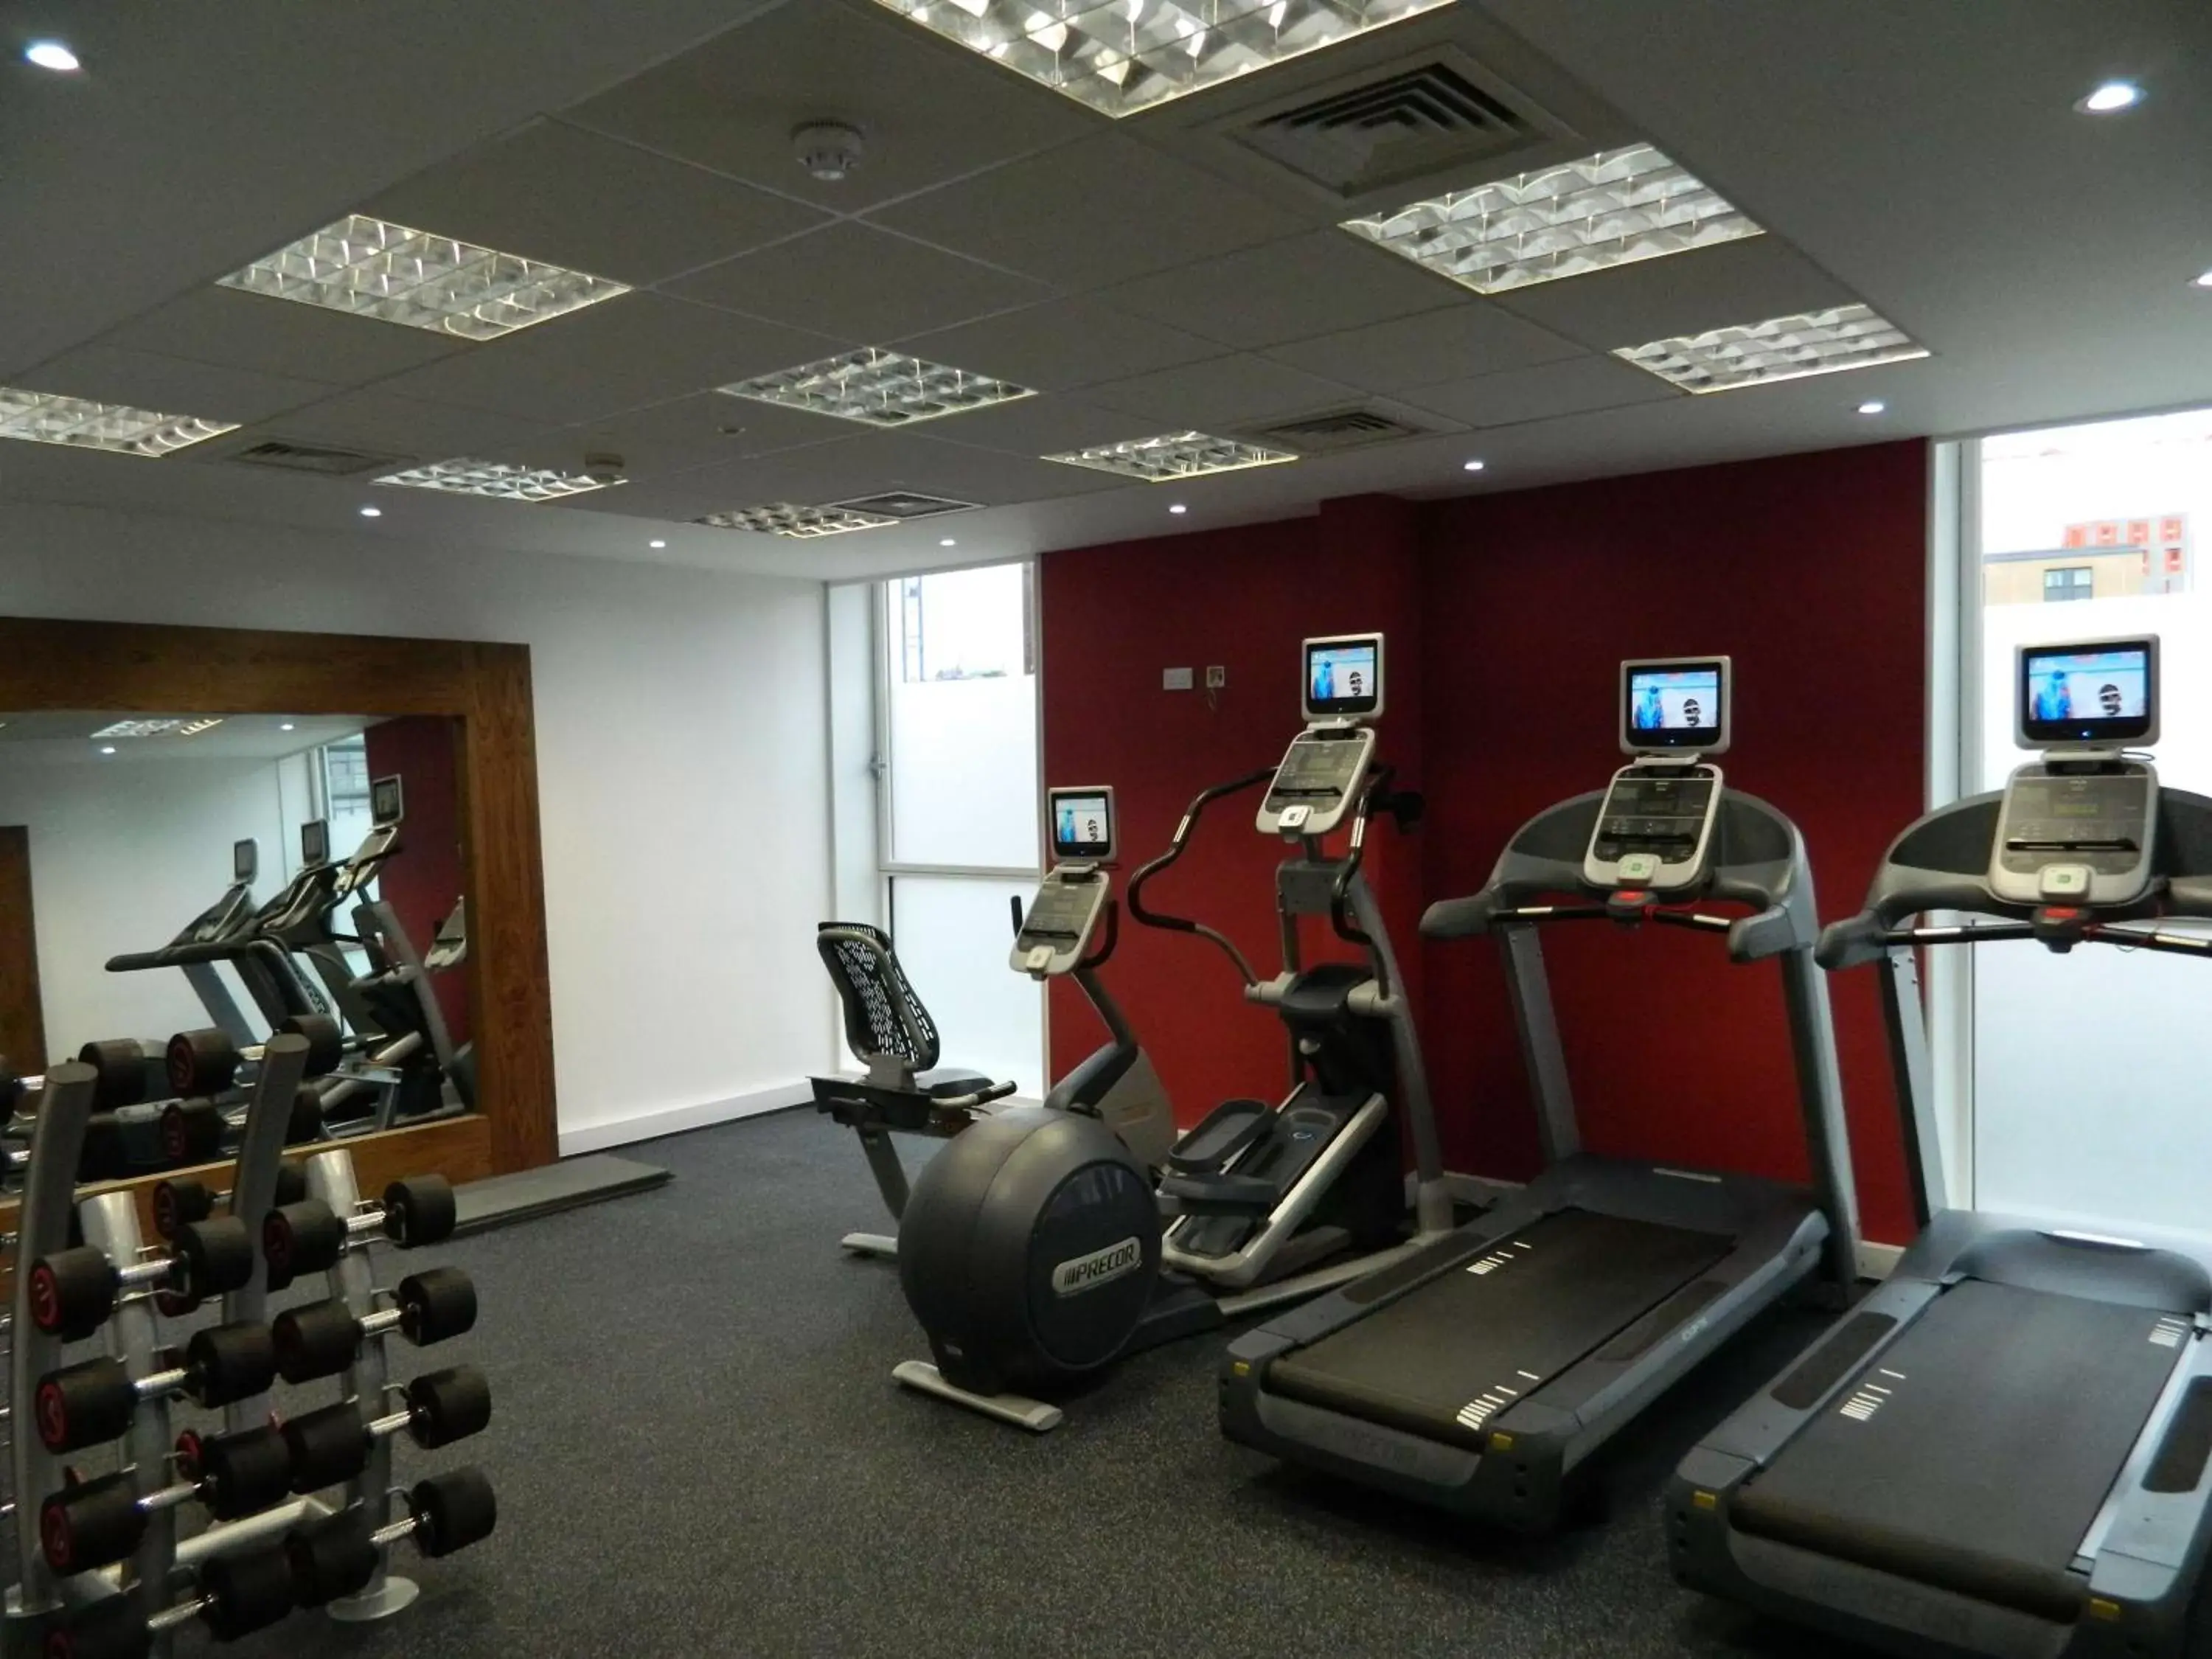 Fitness centre/facilities, Fitness Center/Facilities in Hilton Garden Inn Livermore